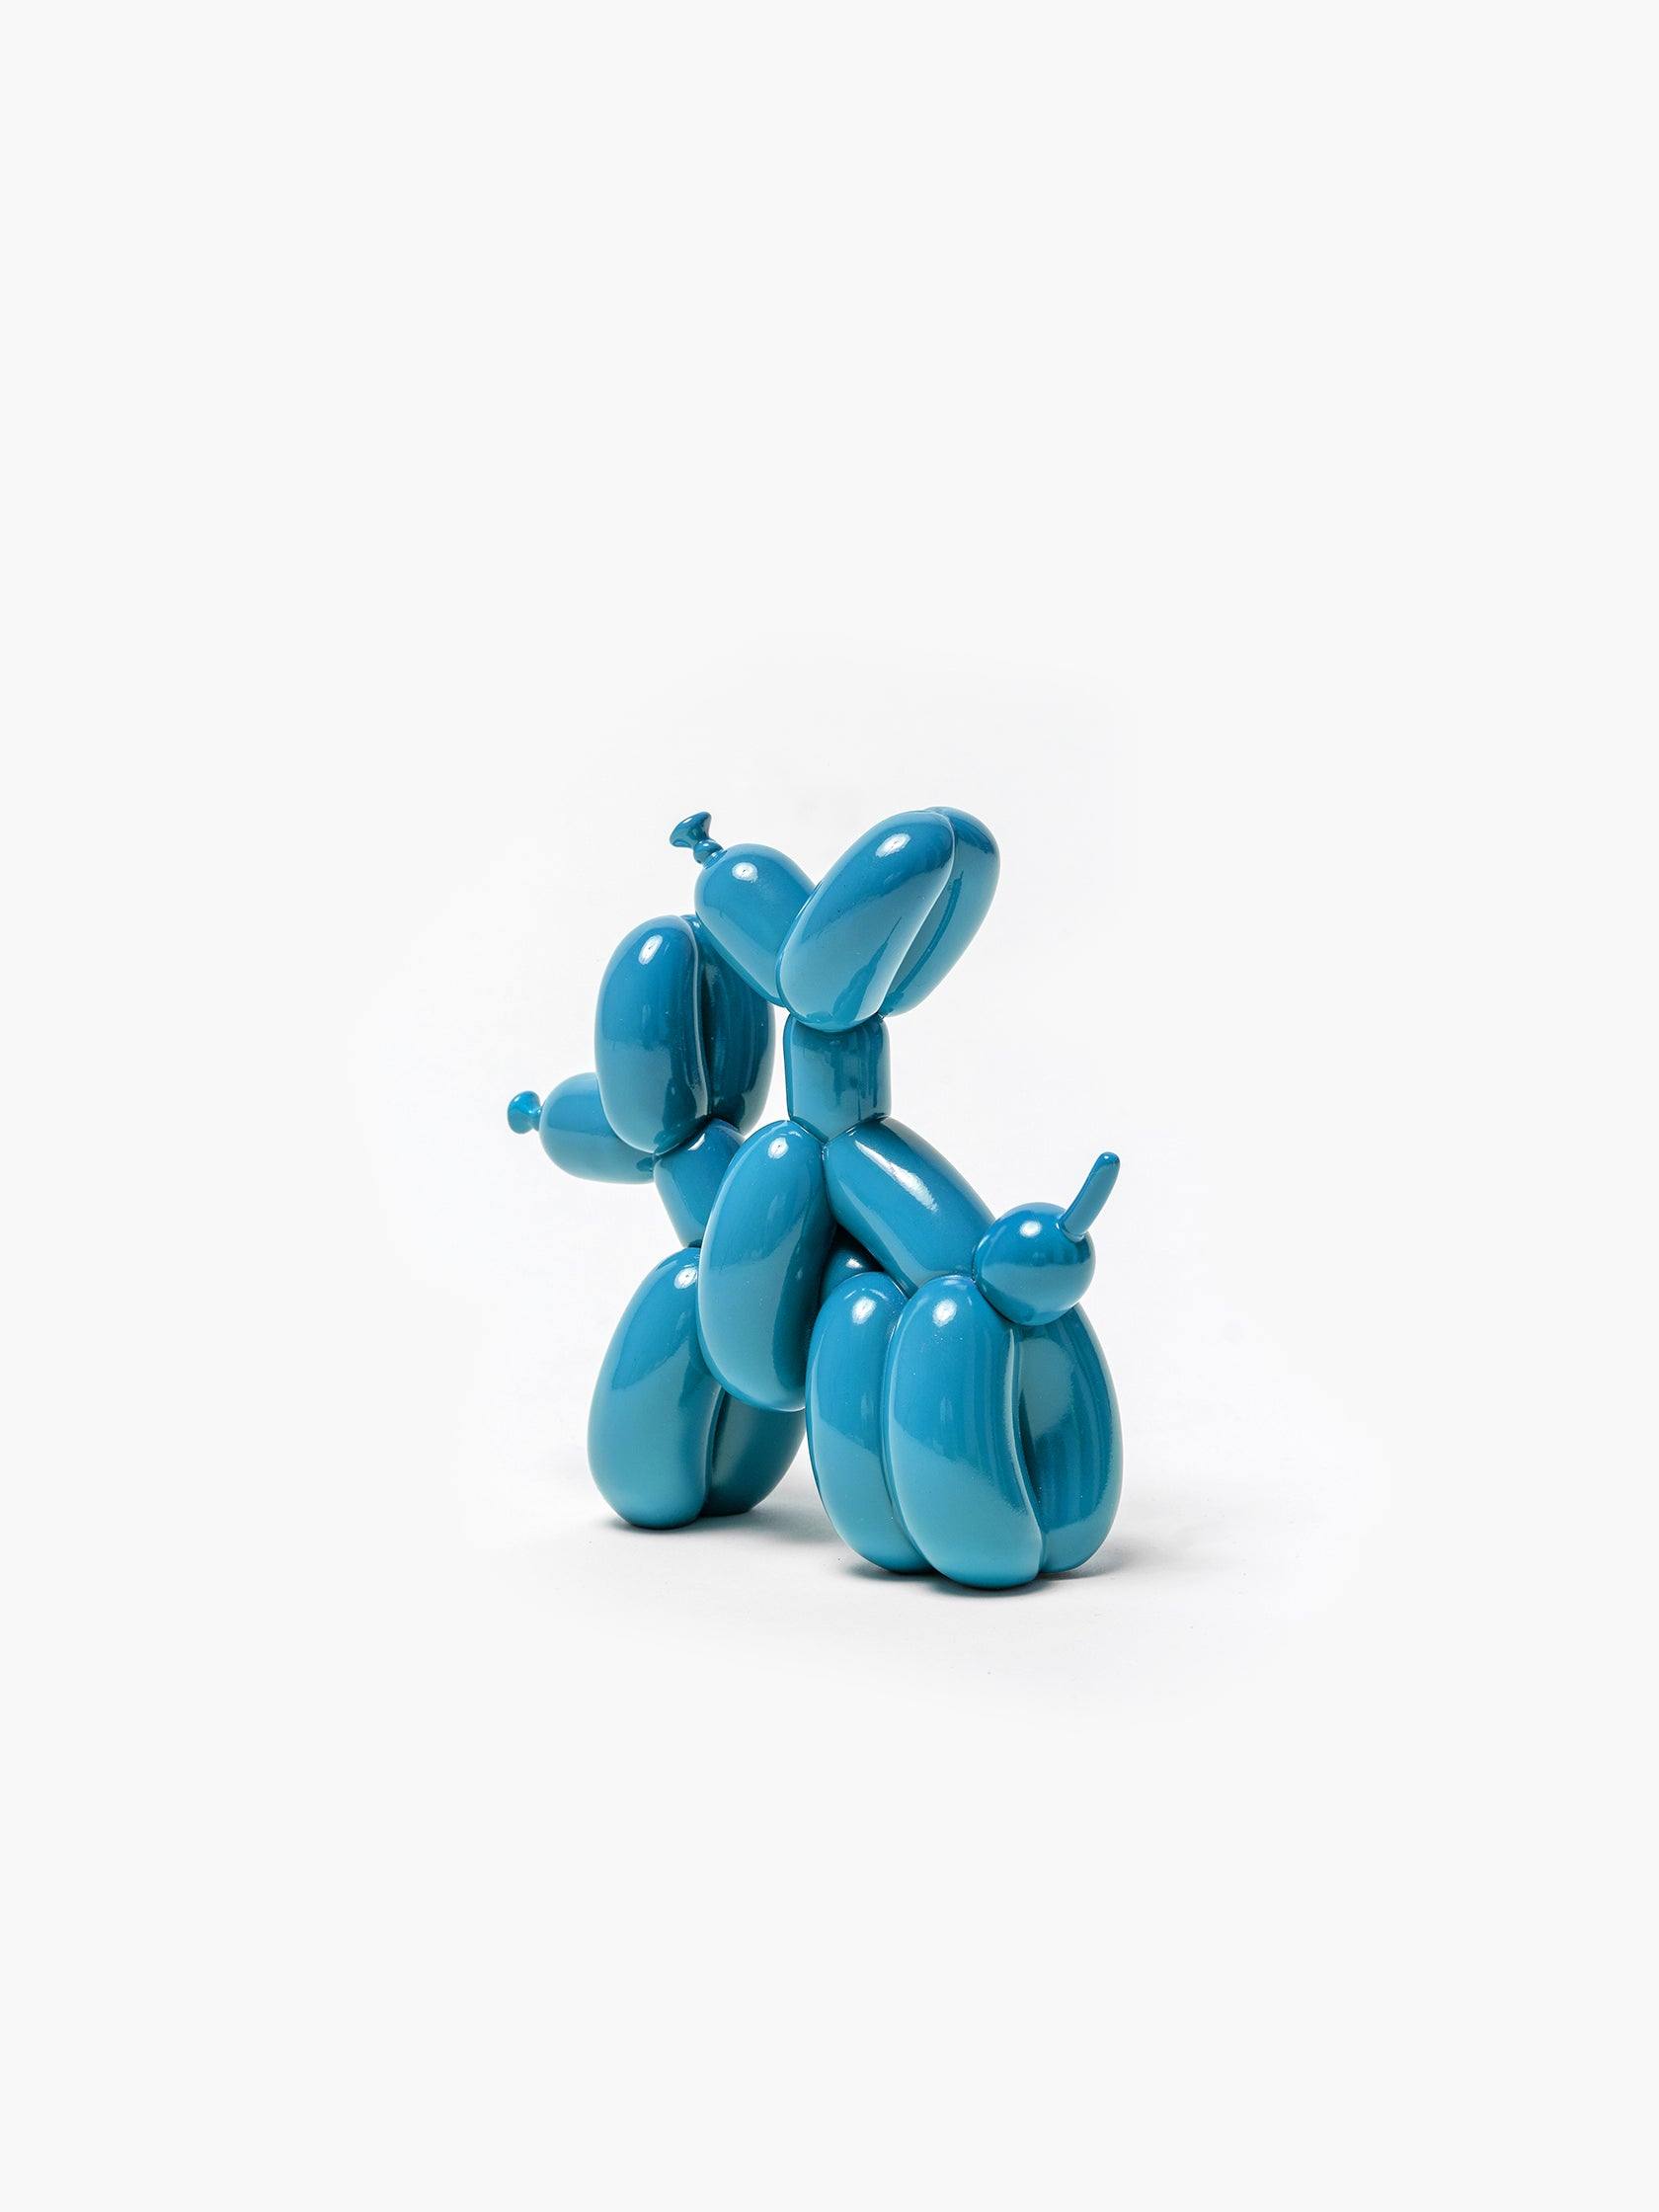 Humpek Balloon Dog mini Blue by Whatshisname - Mankovsky Gallery